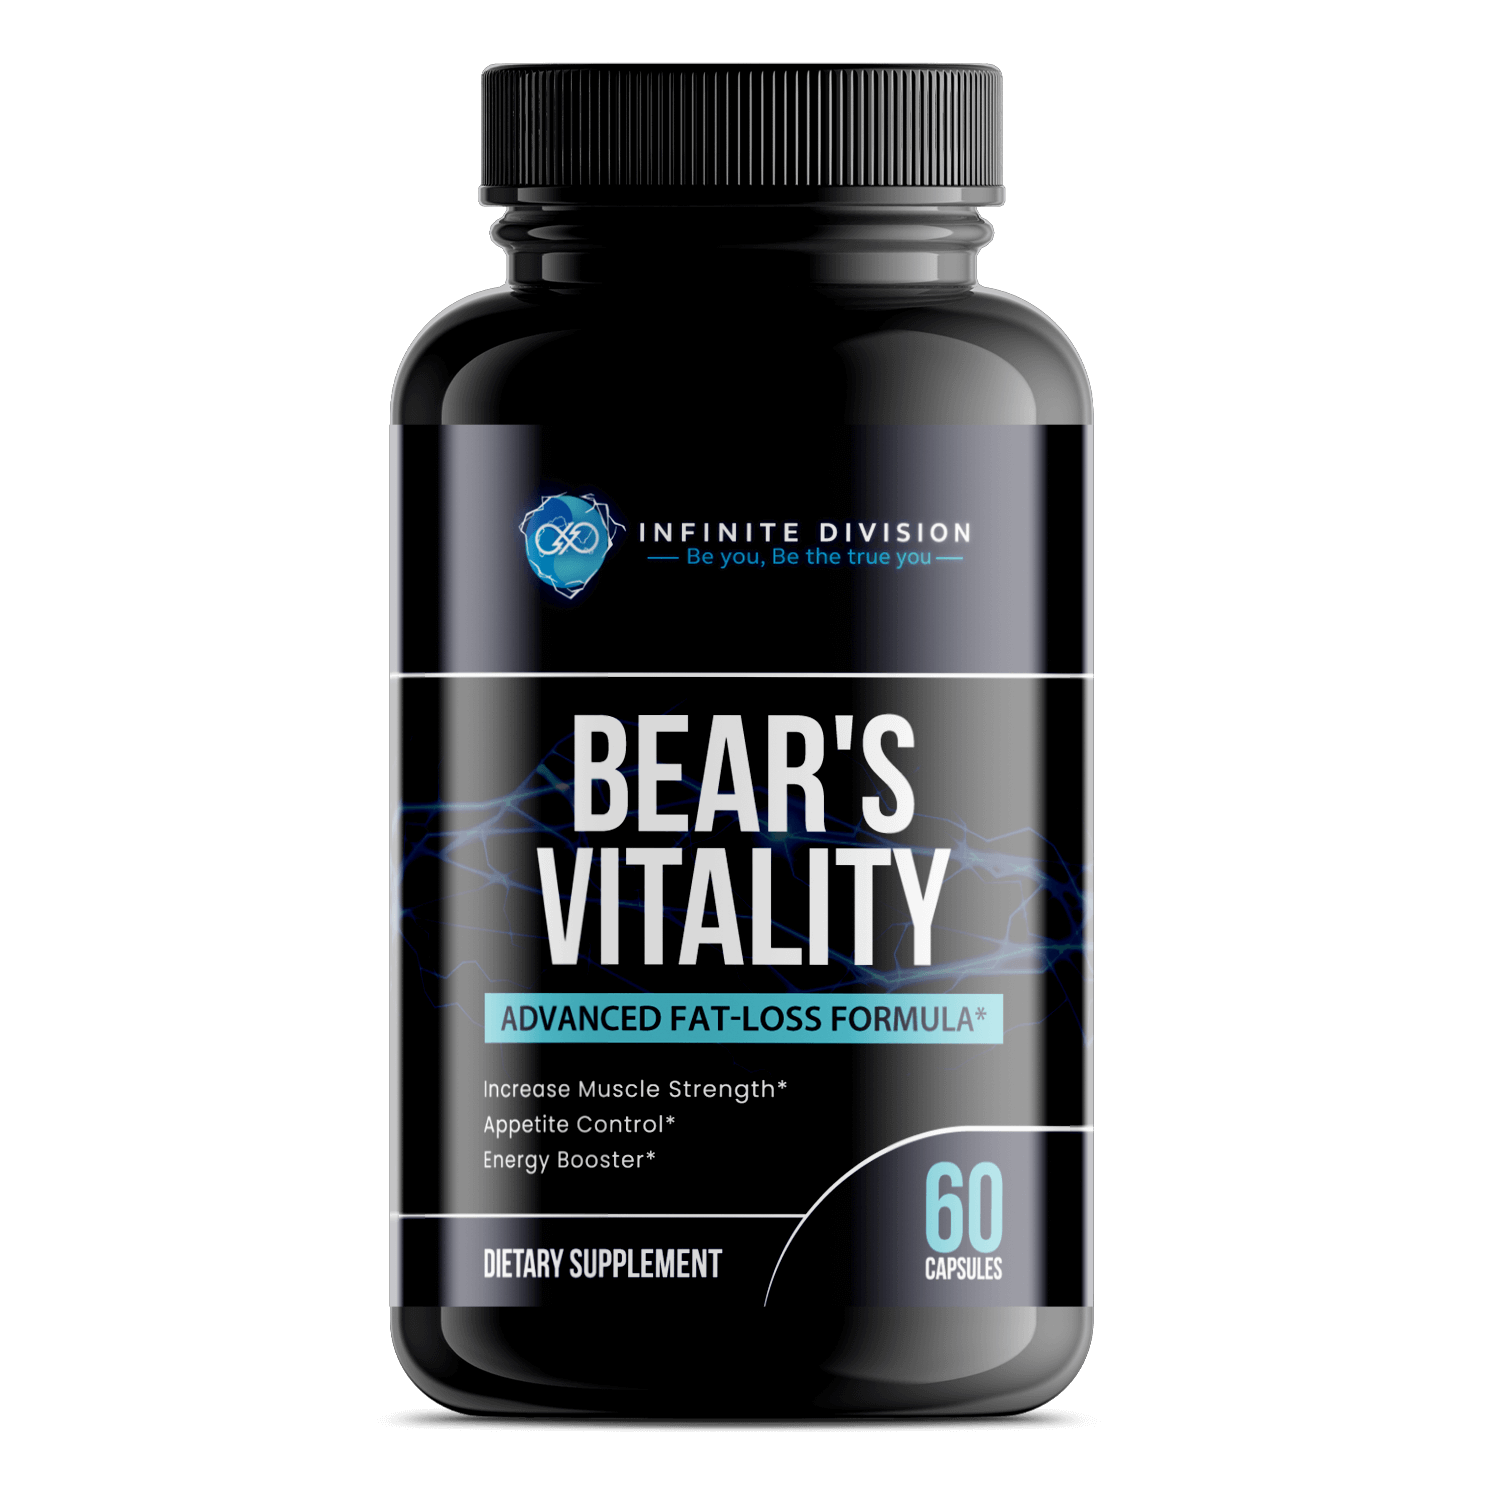 Bear's Vitality - Advanced Fat Loss Formula